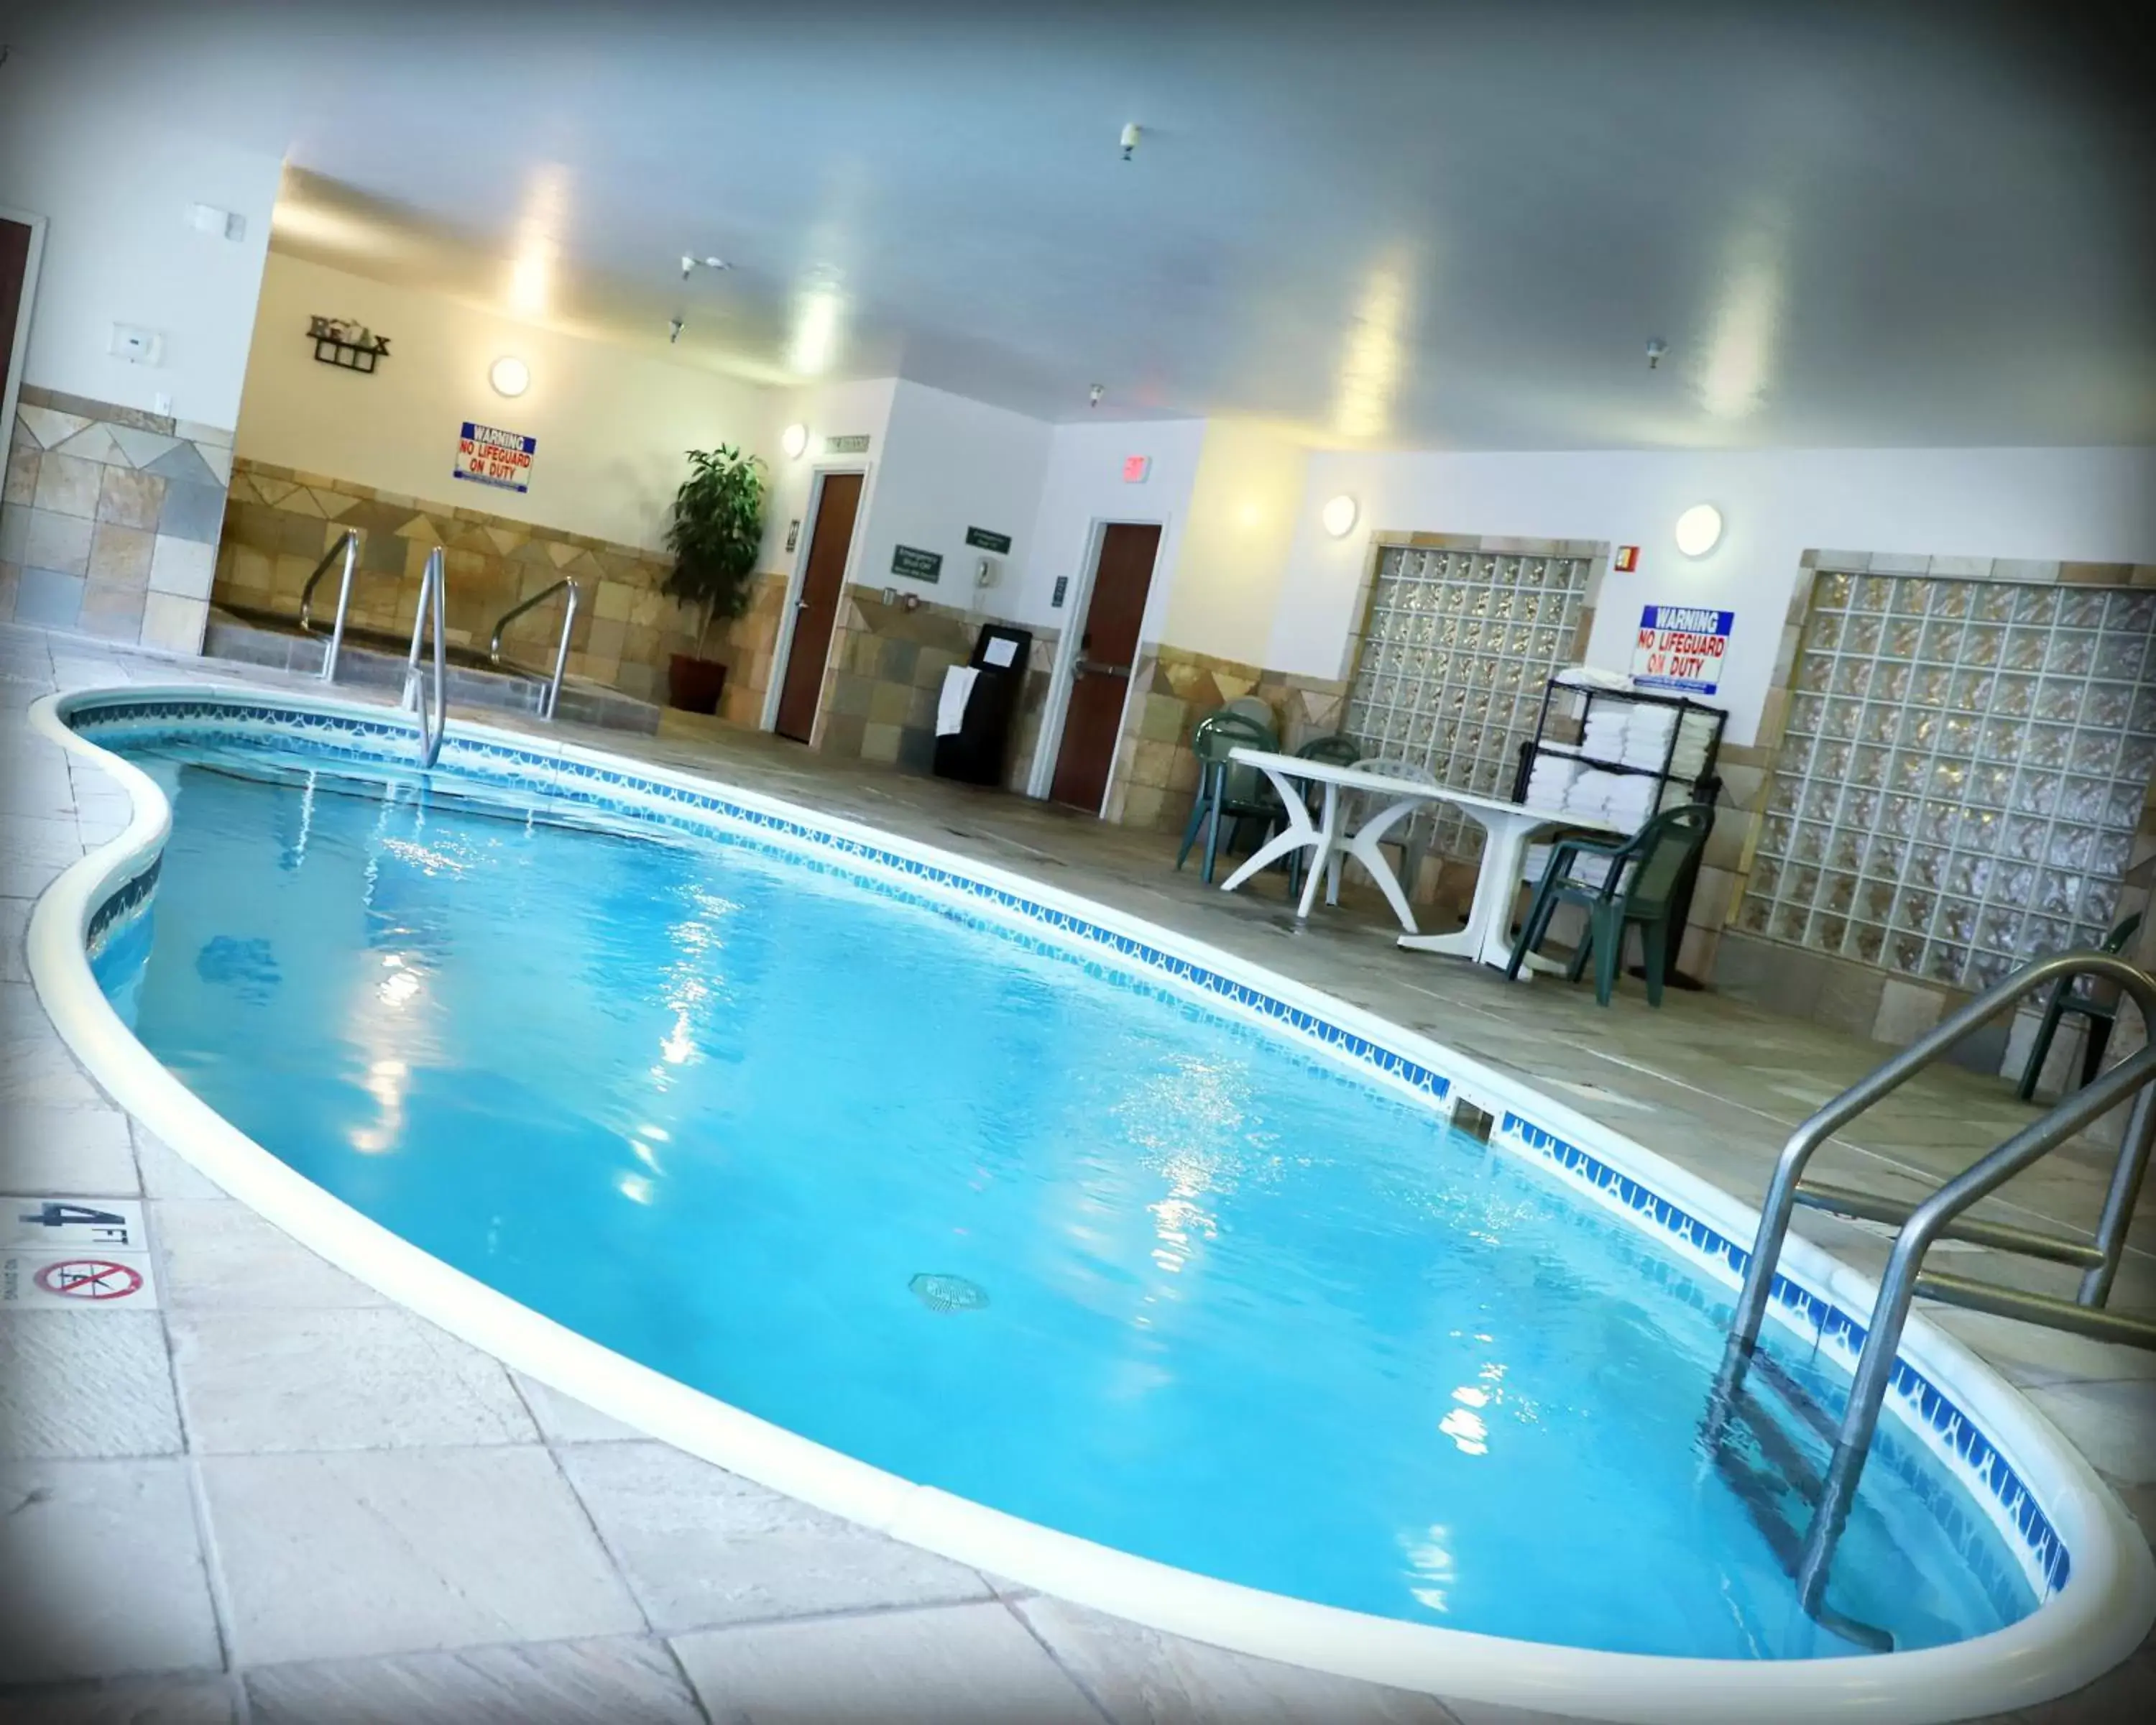 Swimming Pool in Comfort Inn & Suites Hotel in the Black Hills